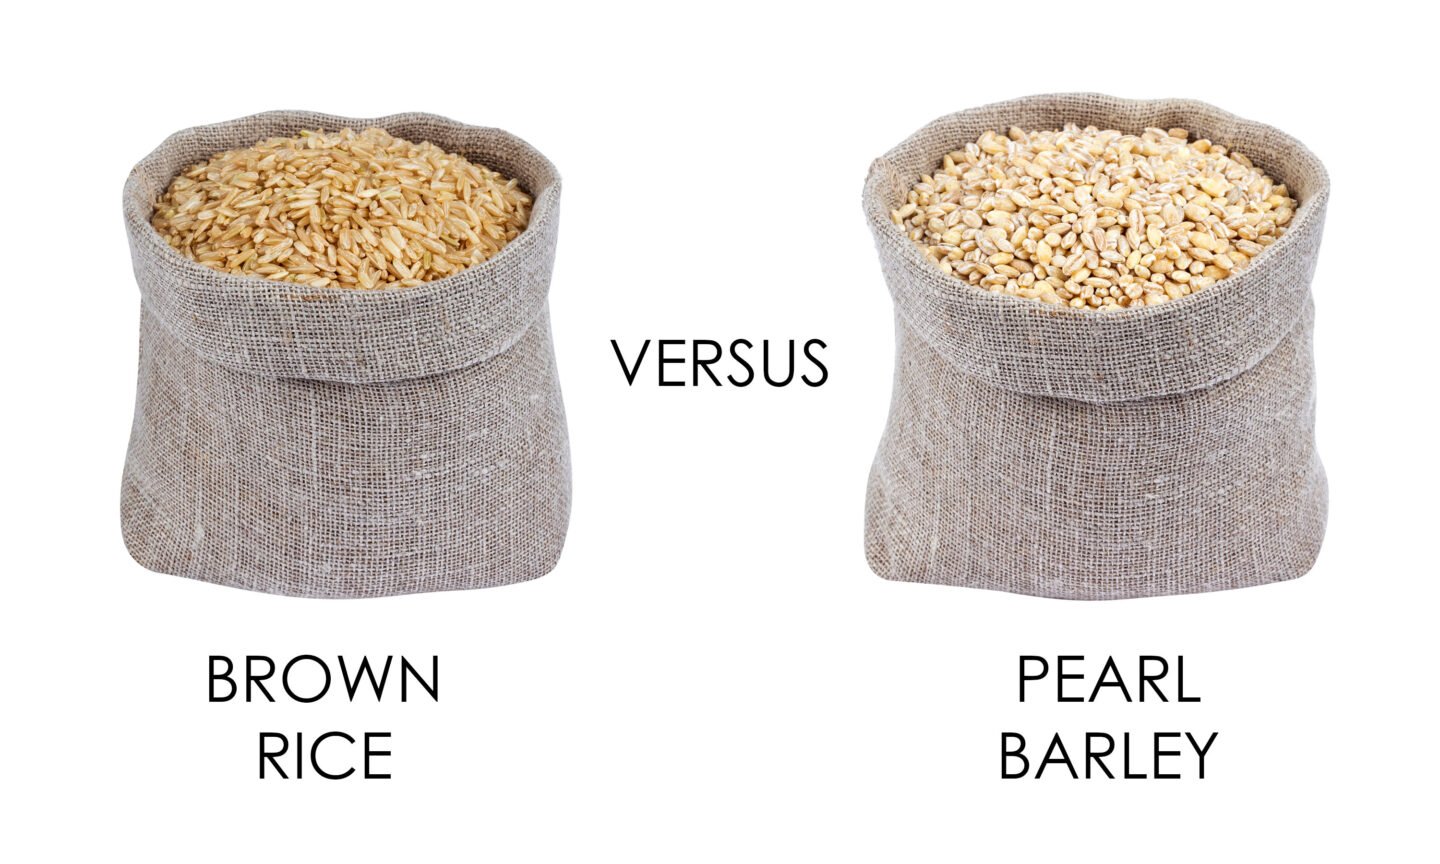 brown rice versus pearl barley